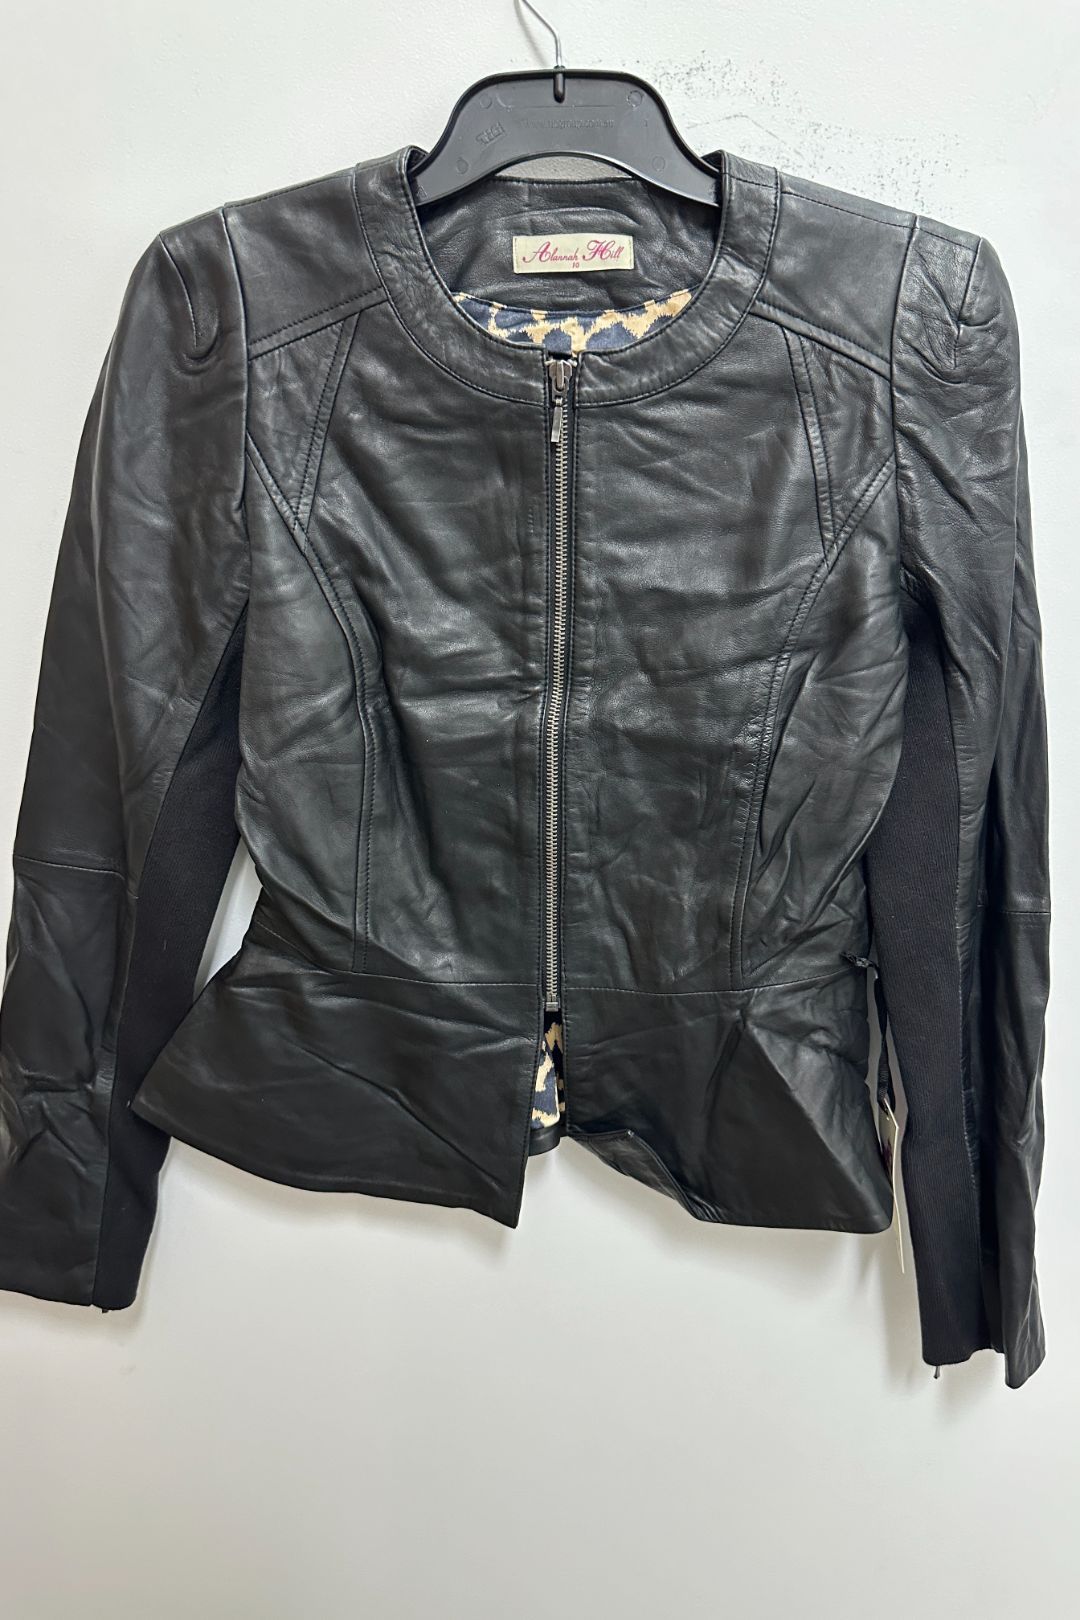 Alannah Hill Black My Femme Fatale Leather Jacket